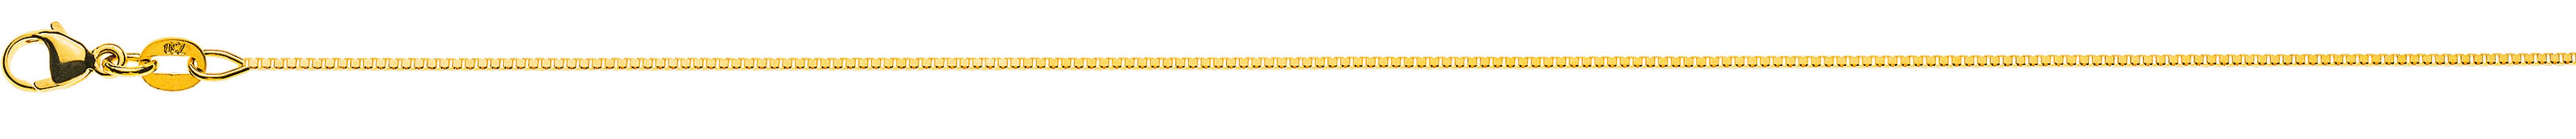 AURONOS Prestige Necklace yellow gold 18K Venetian chain diamond 50cm 0.8mm